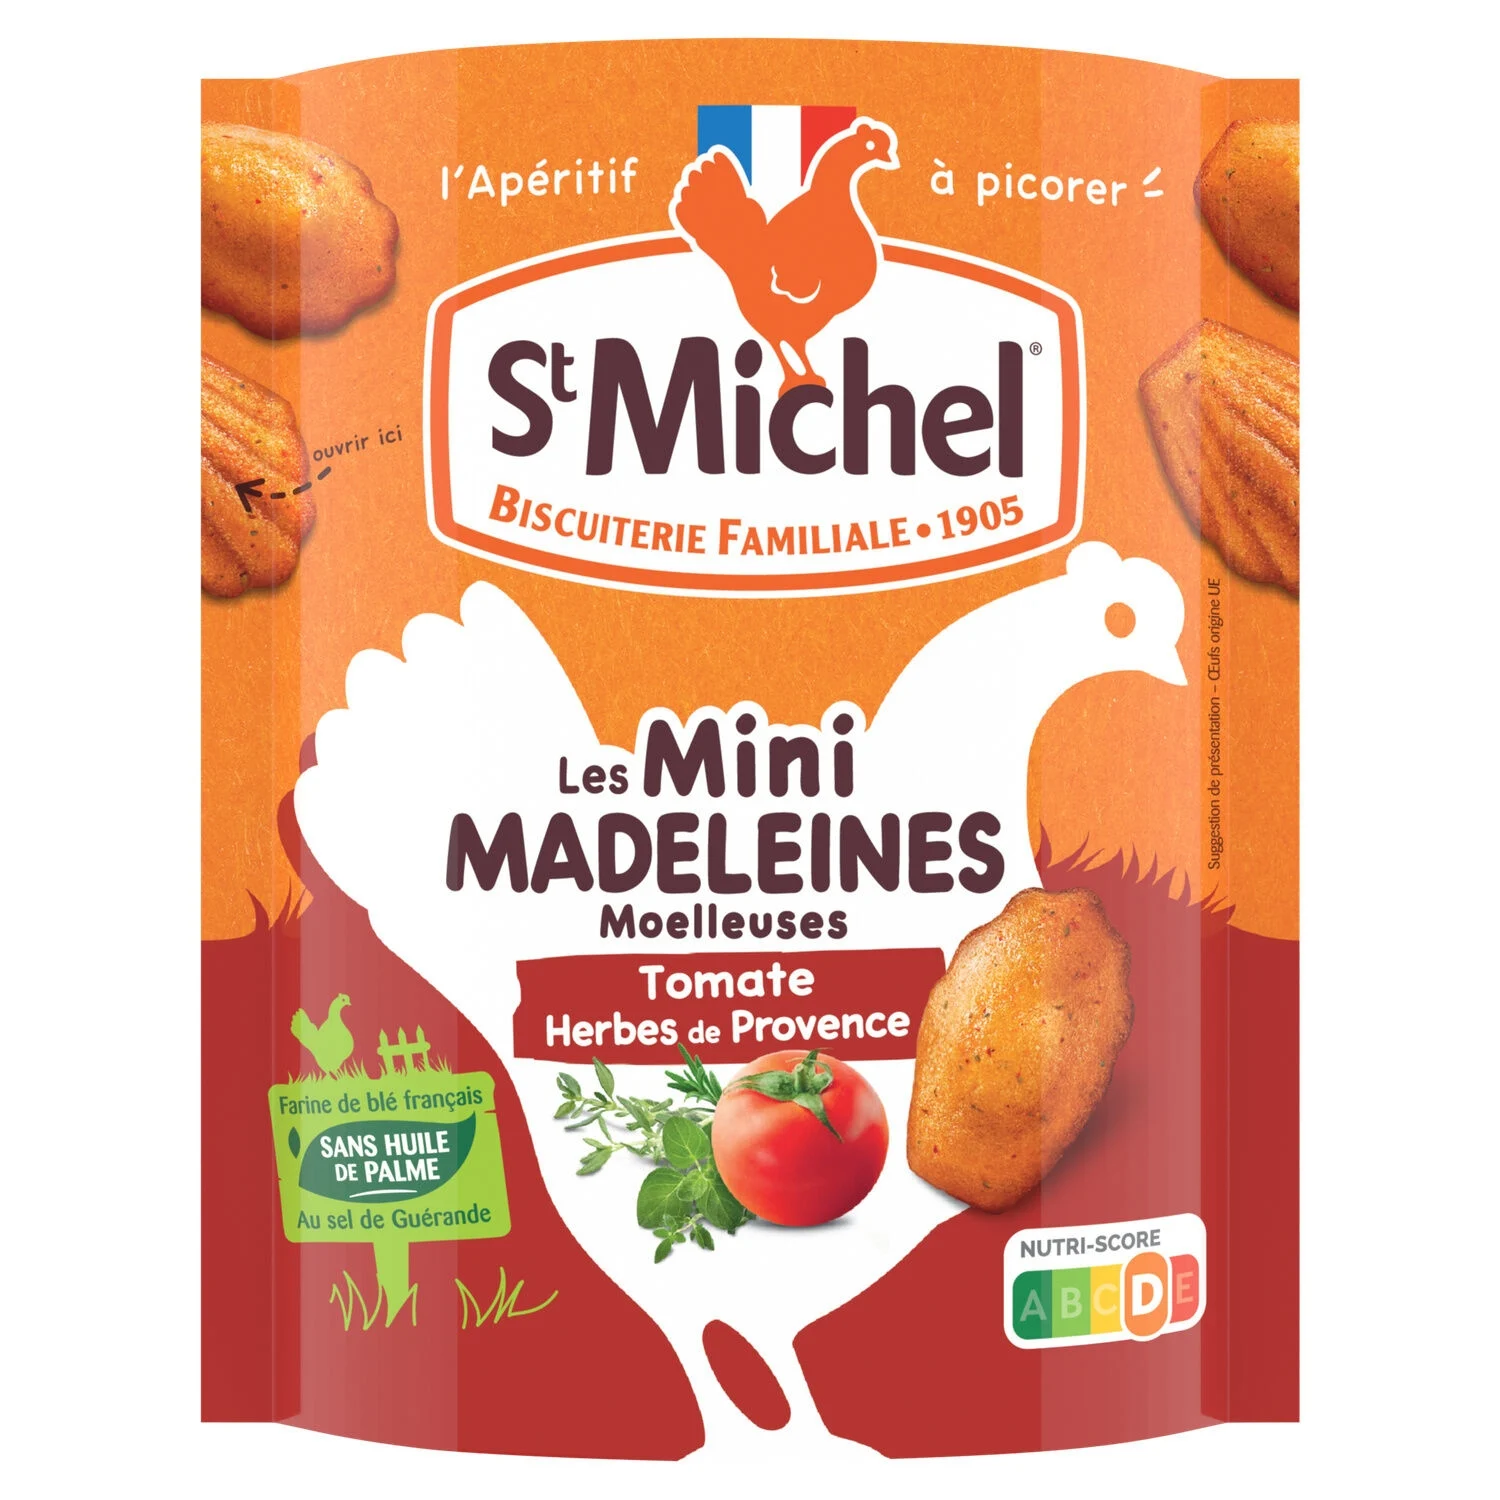 Mini Madeleine Moelleuse Tomate Herbes De Provence 100g - St Michel